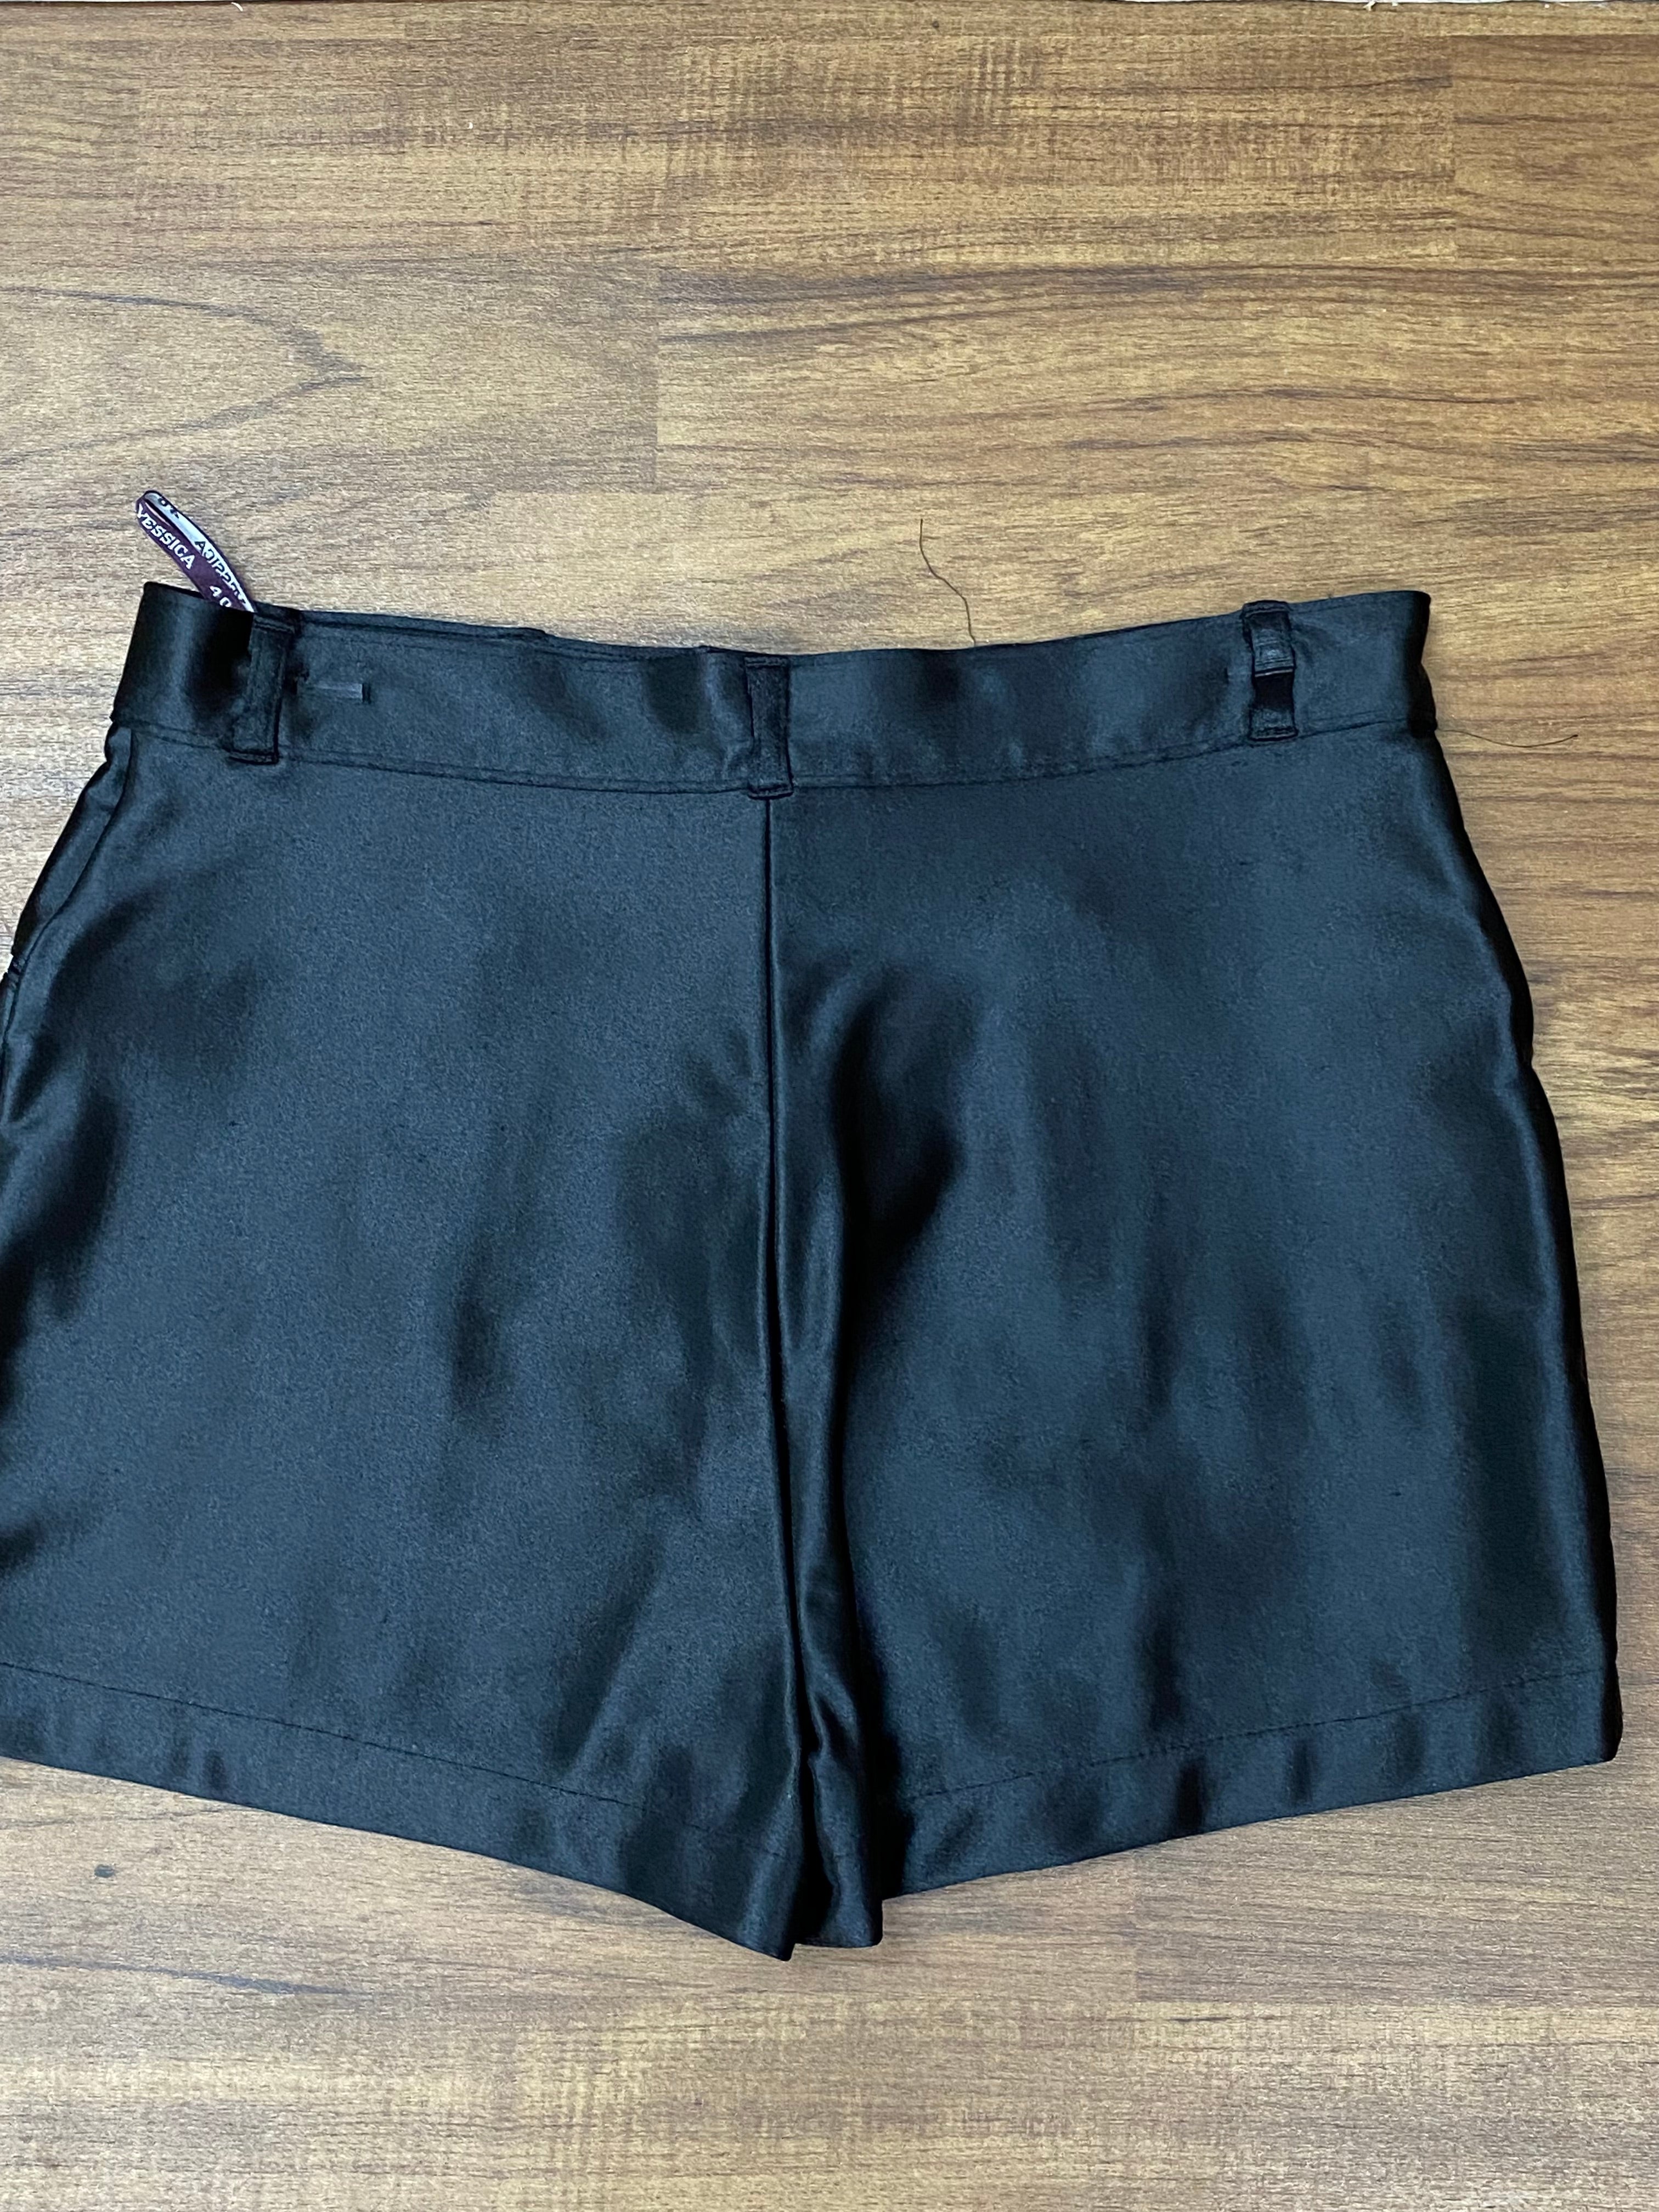 Vintage Hotpants Gr.40, kurze Hose in schwarz